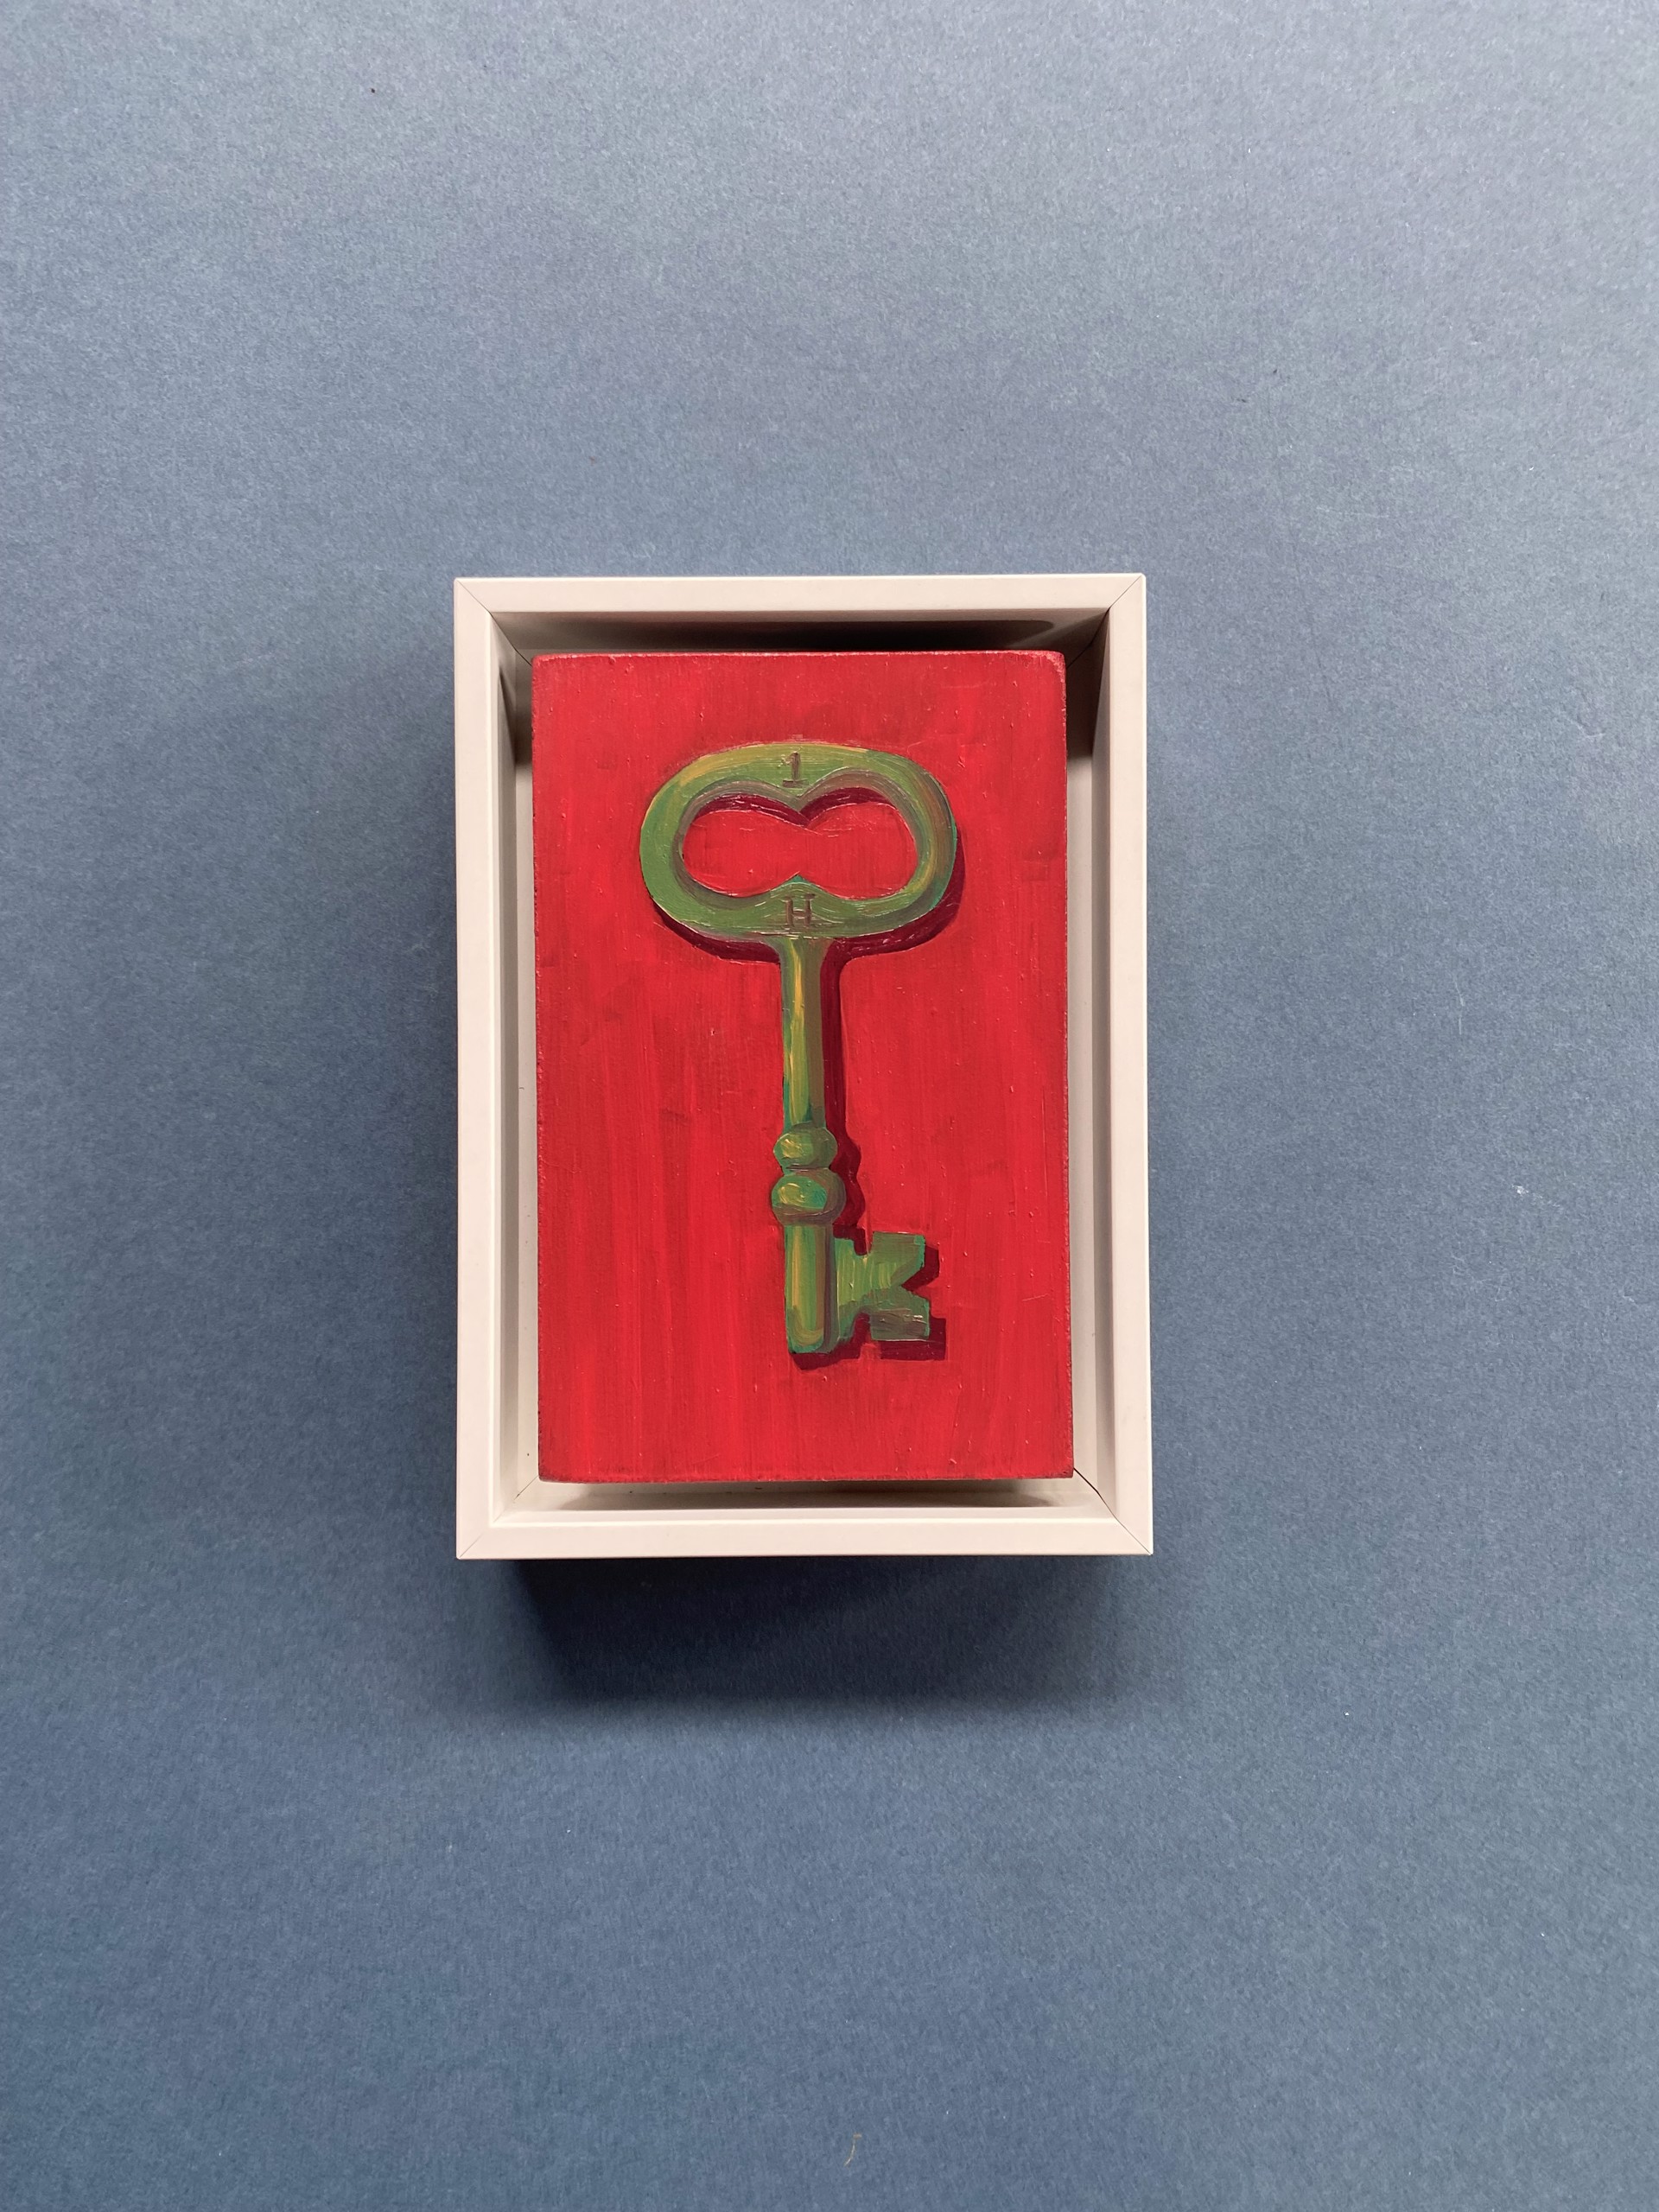 Key No. 21 by Stephen Wells